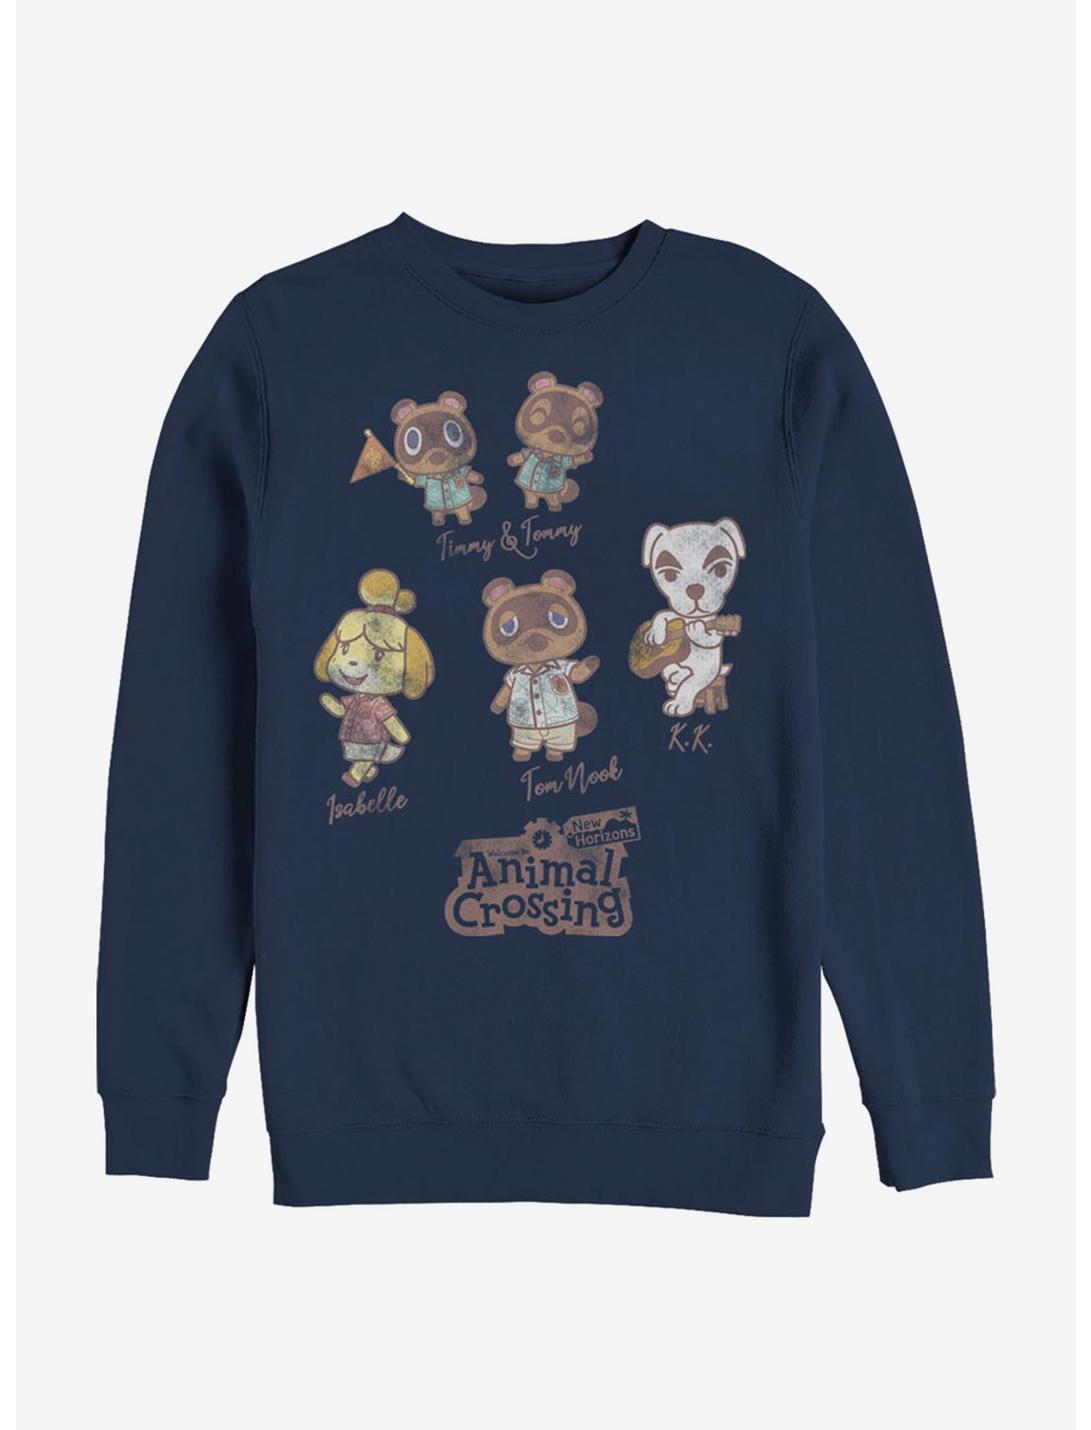 Animal Crossing Character Textbook Crew Sweatshirt, NAVY, hi-res